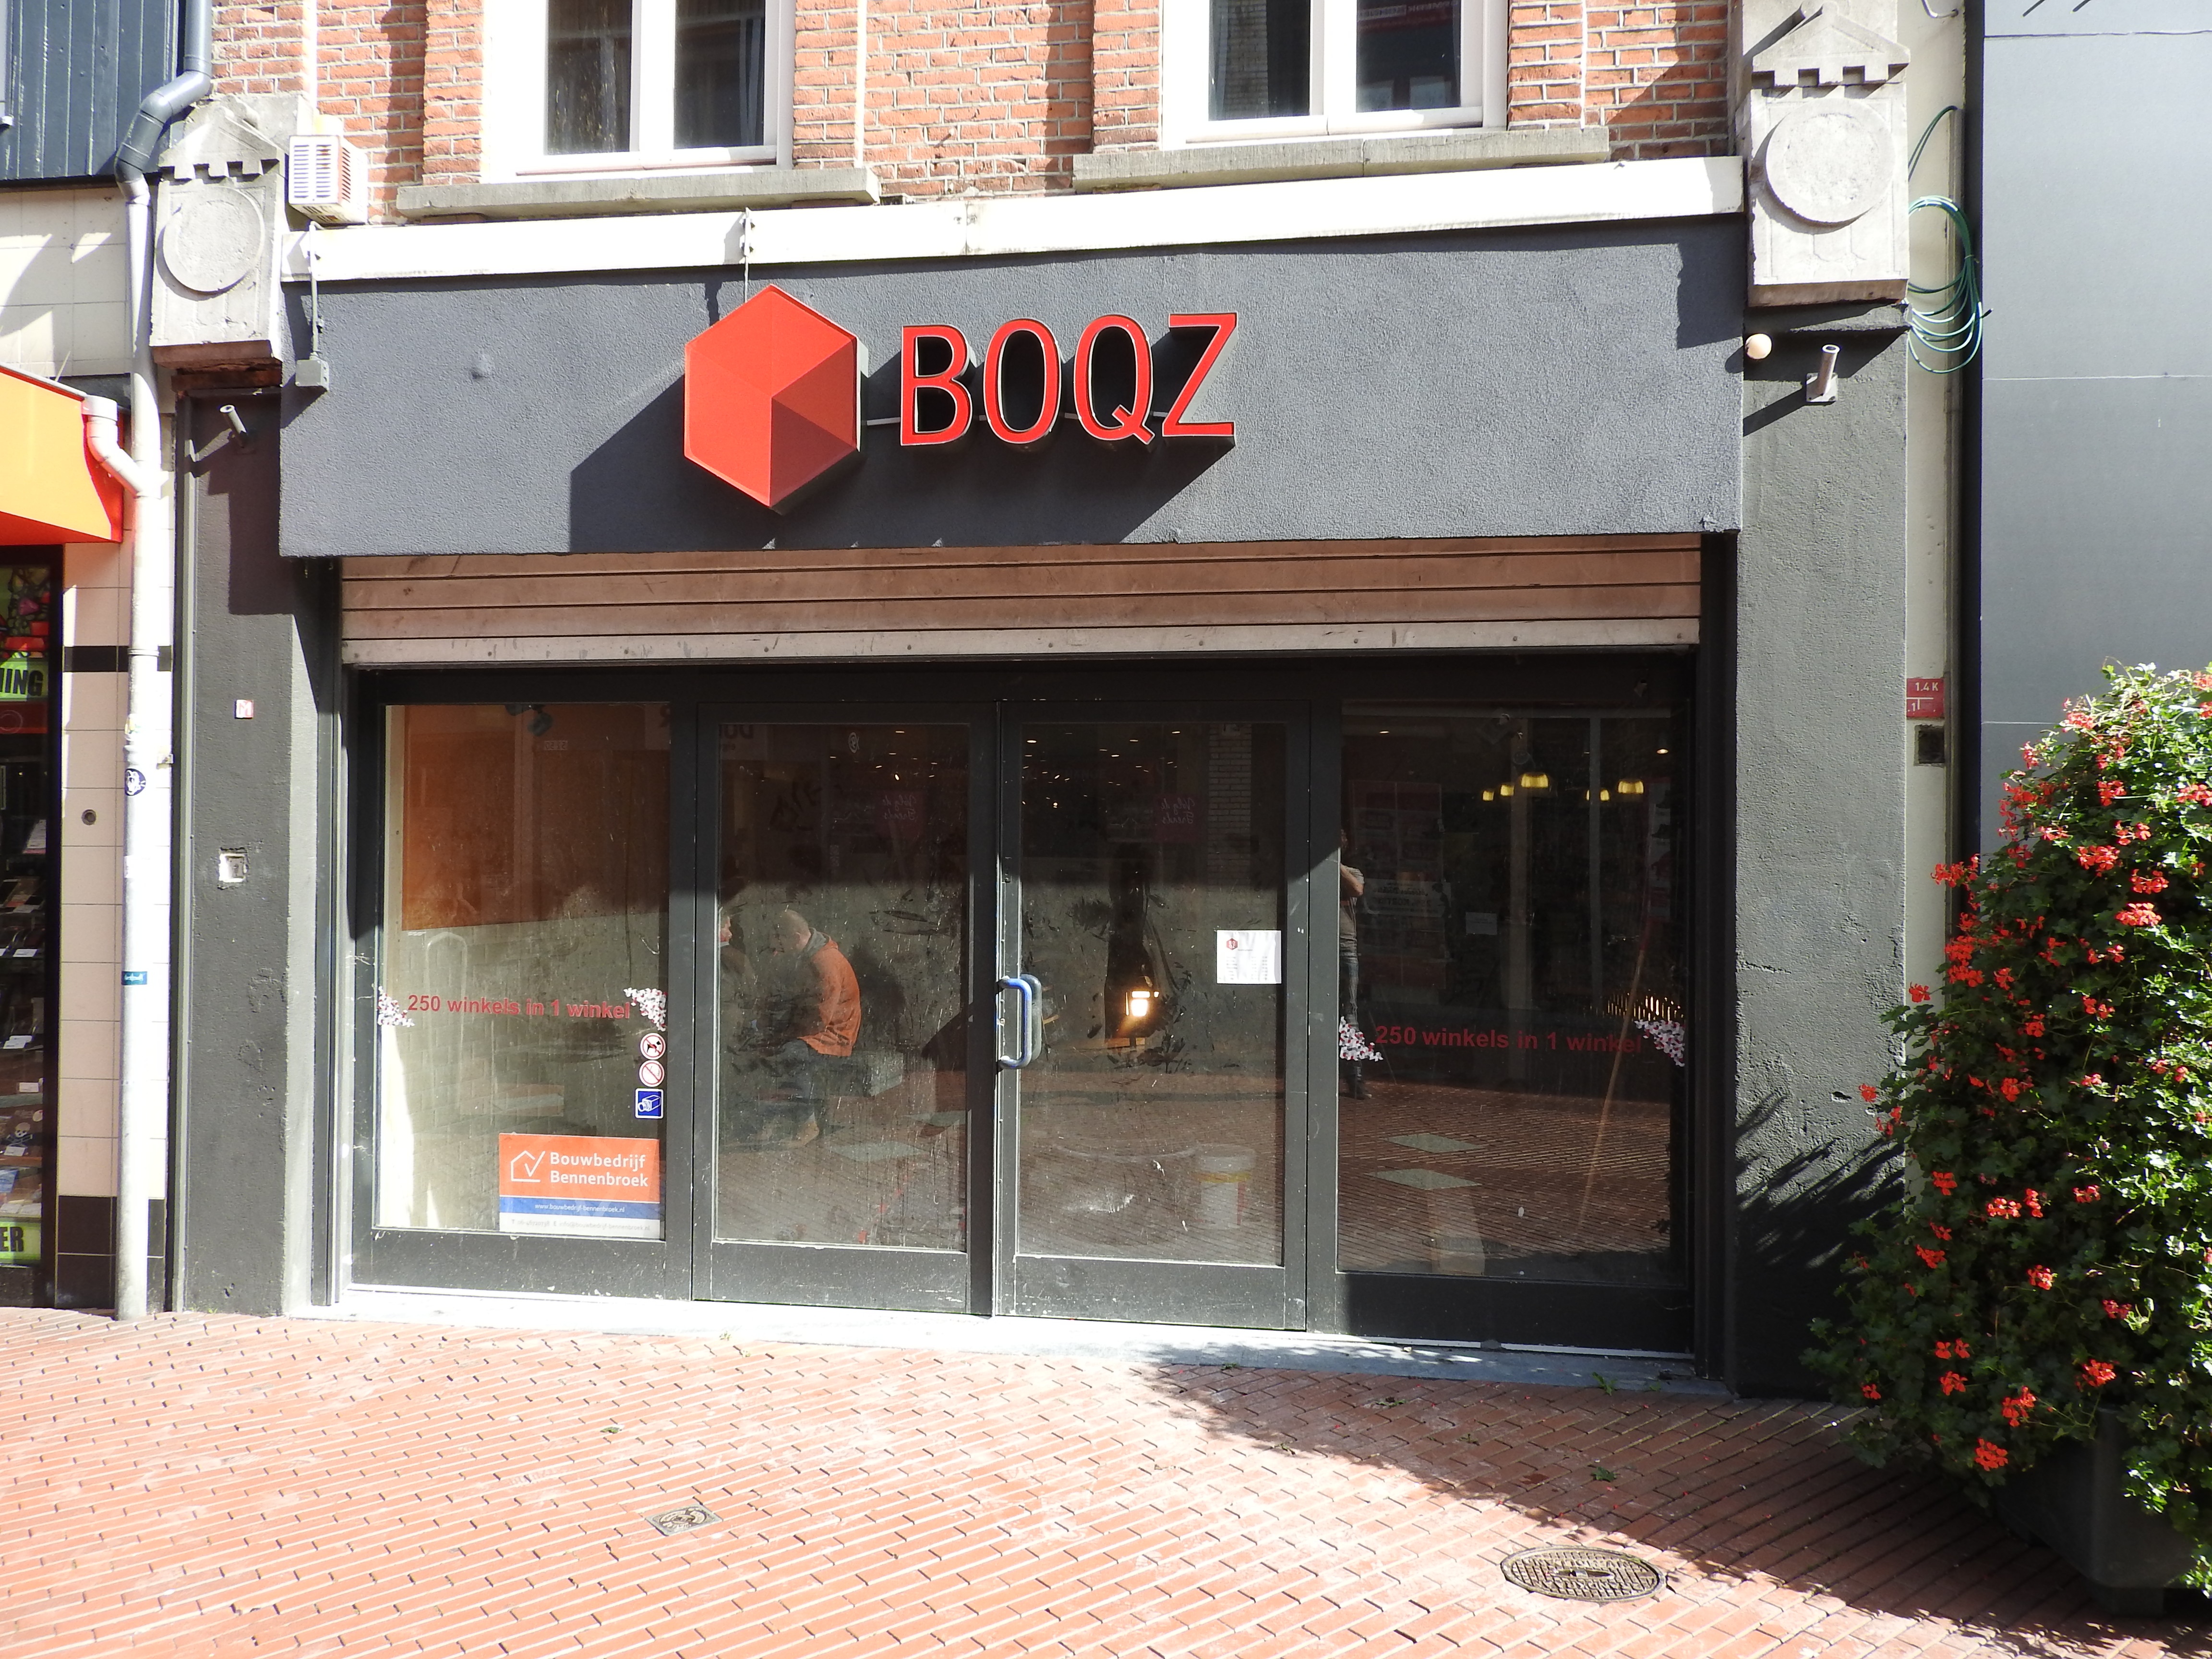 Bol Eindhoven - Bouwbedrijf Bennenbroek